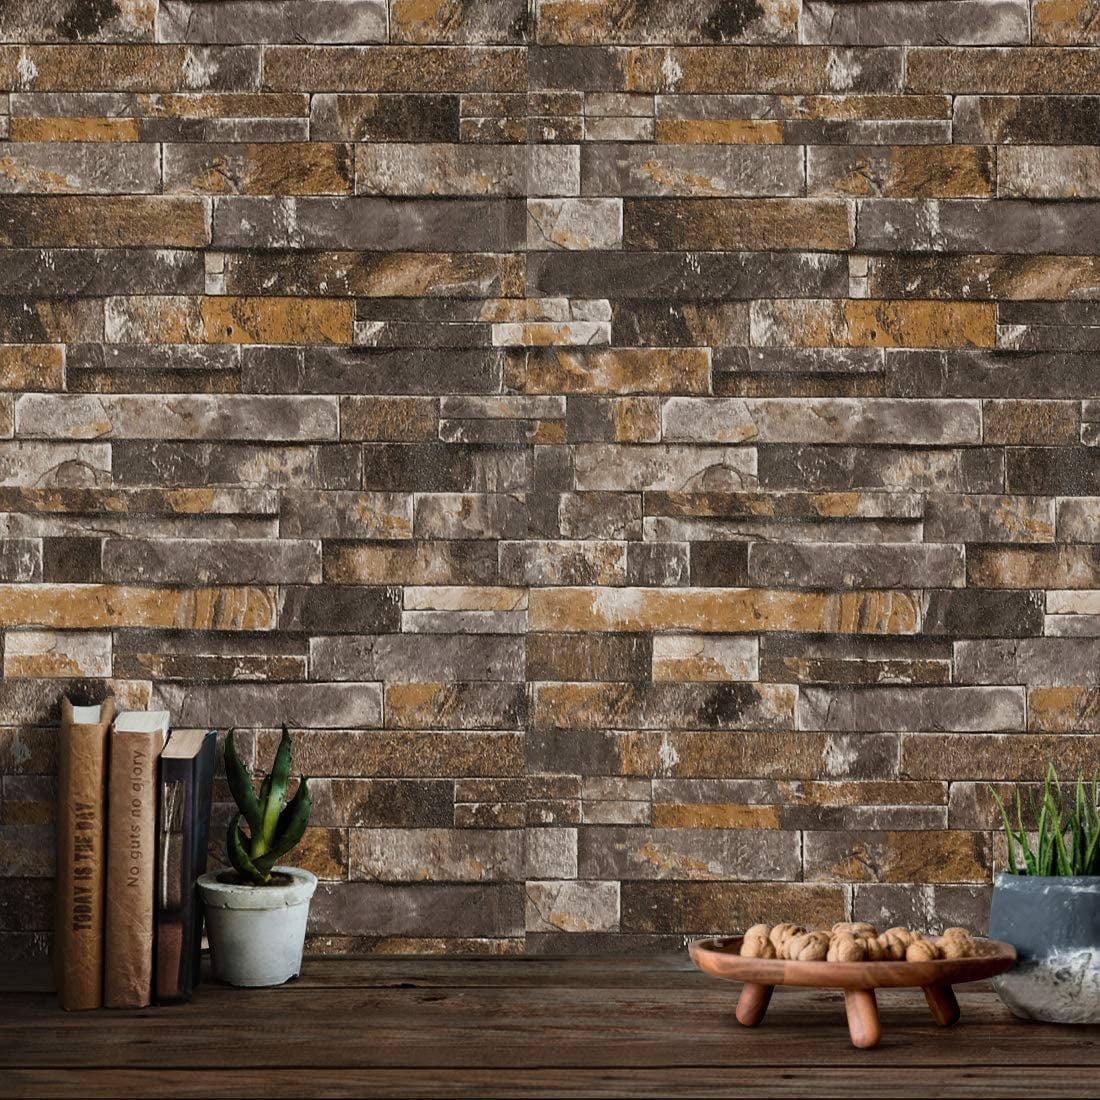 3D Brick Texture Wall Stickers Vinyl Art Decor Wallpaper Rolls Waterproof 10m 